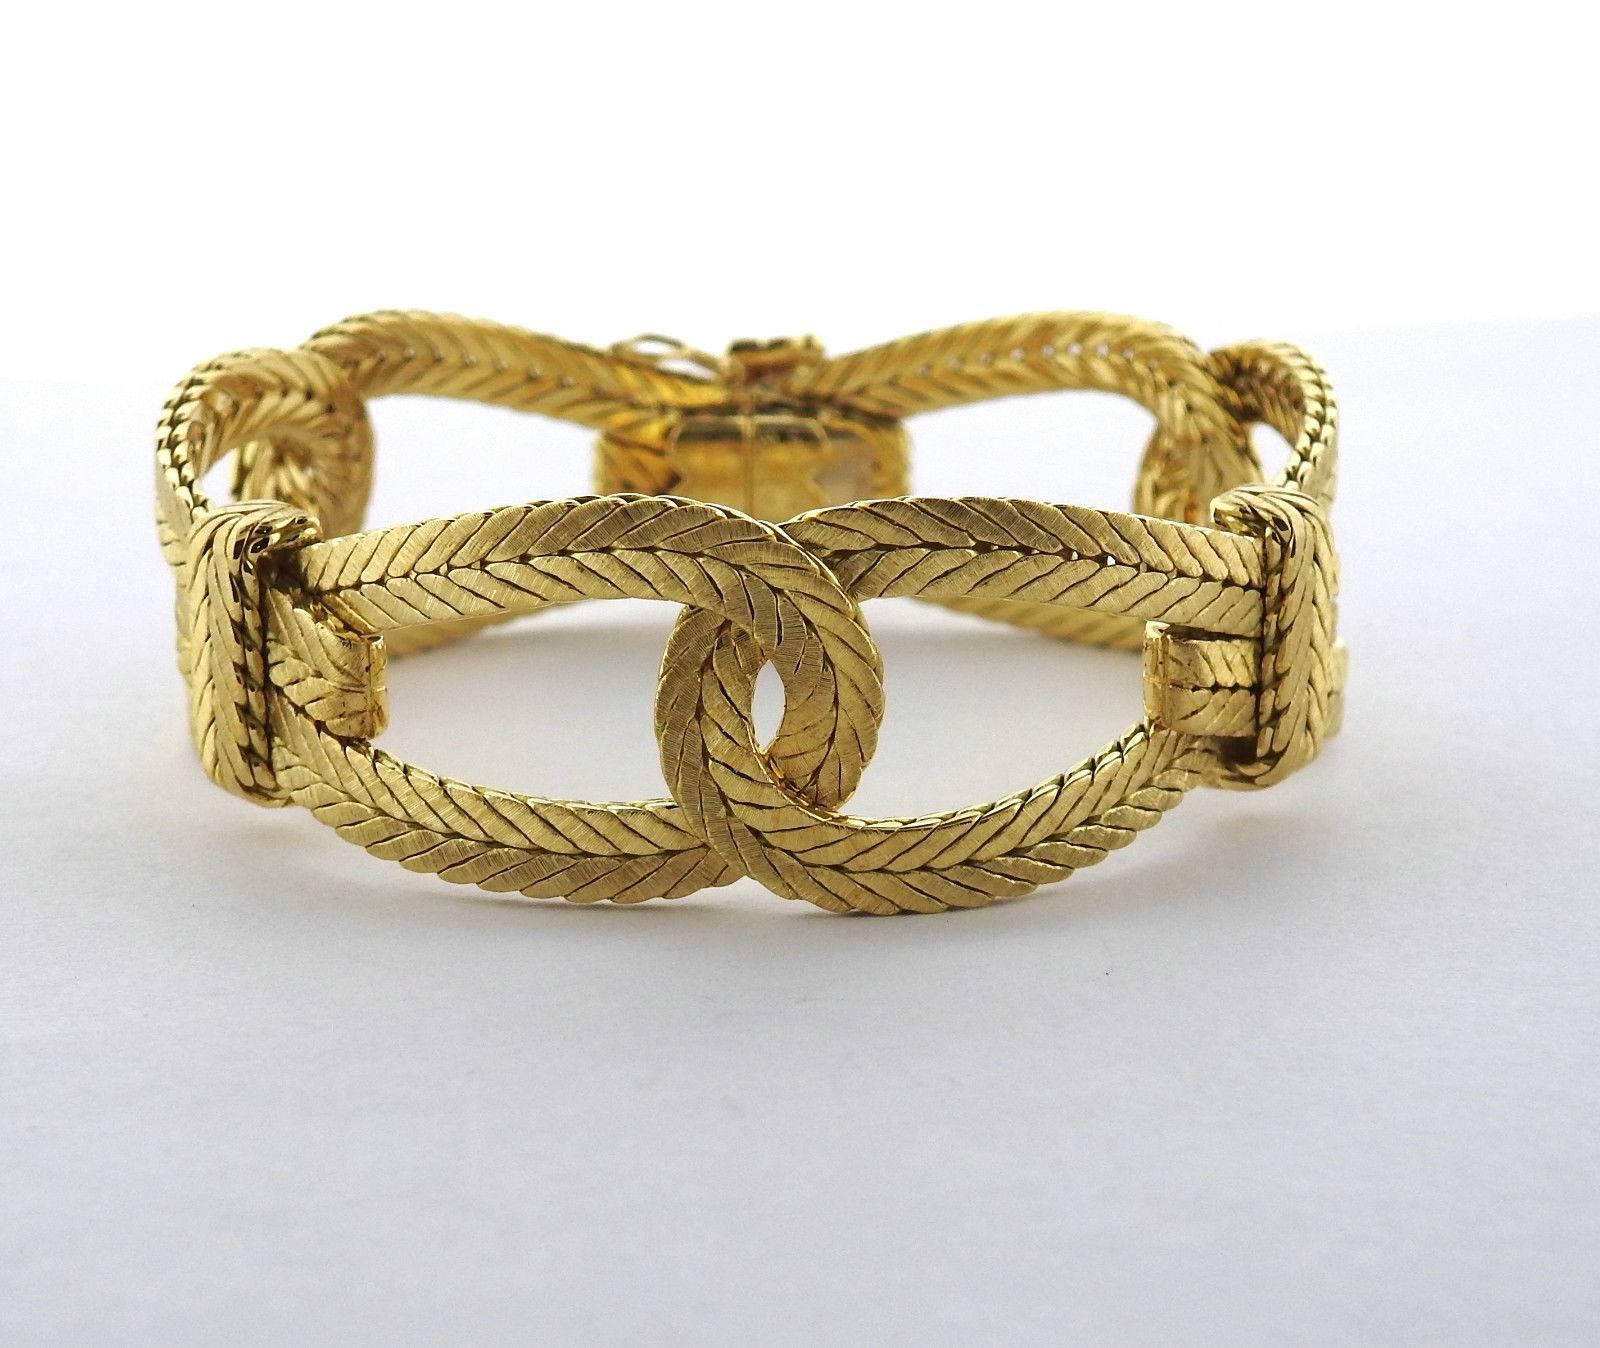 An 18k yellow gold link bracelet by Buccellati.  The bracelet is 7 5/16